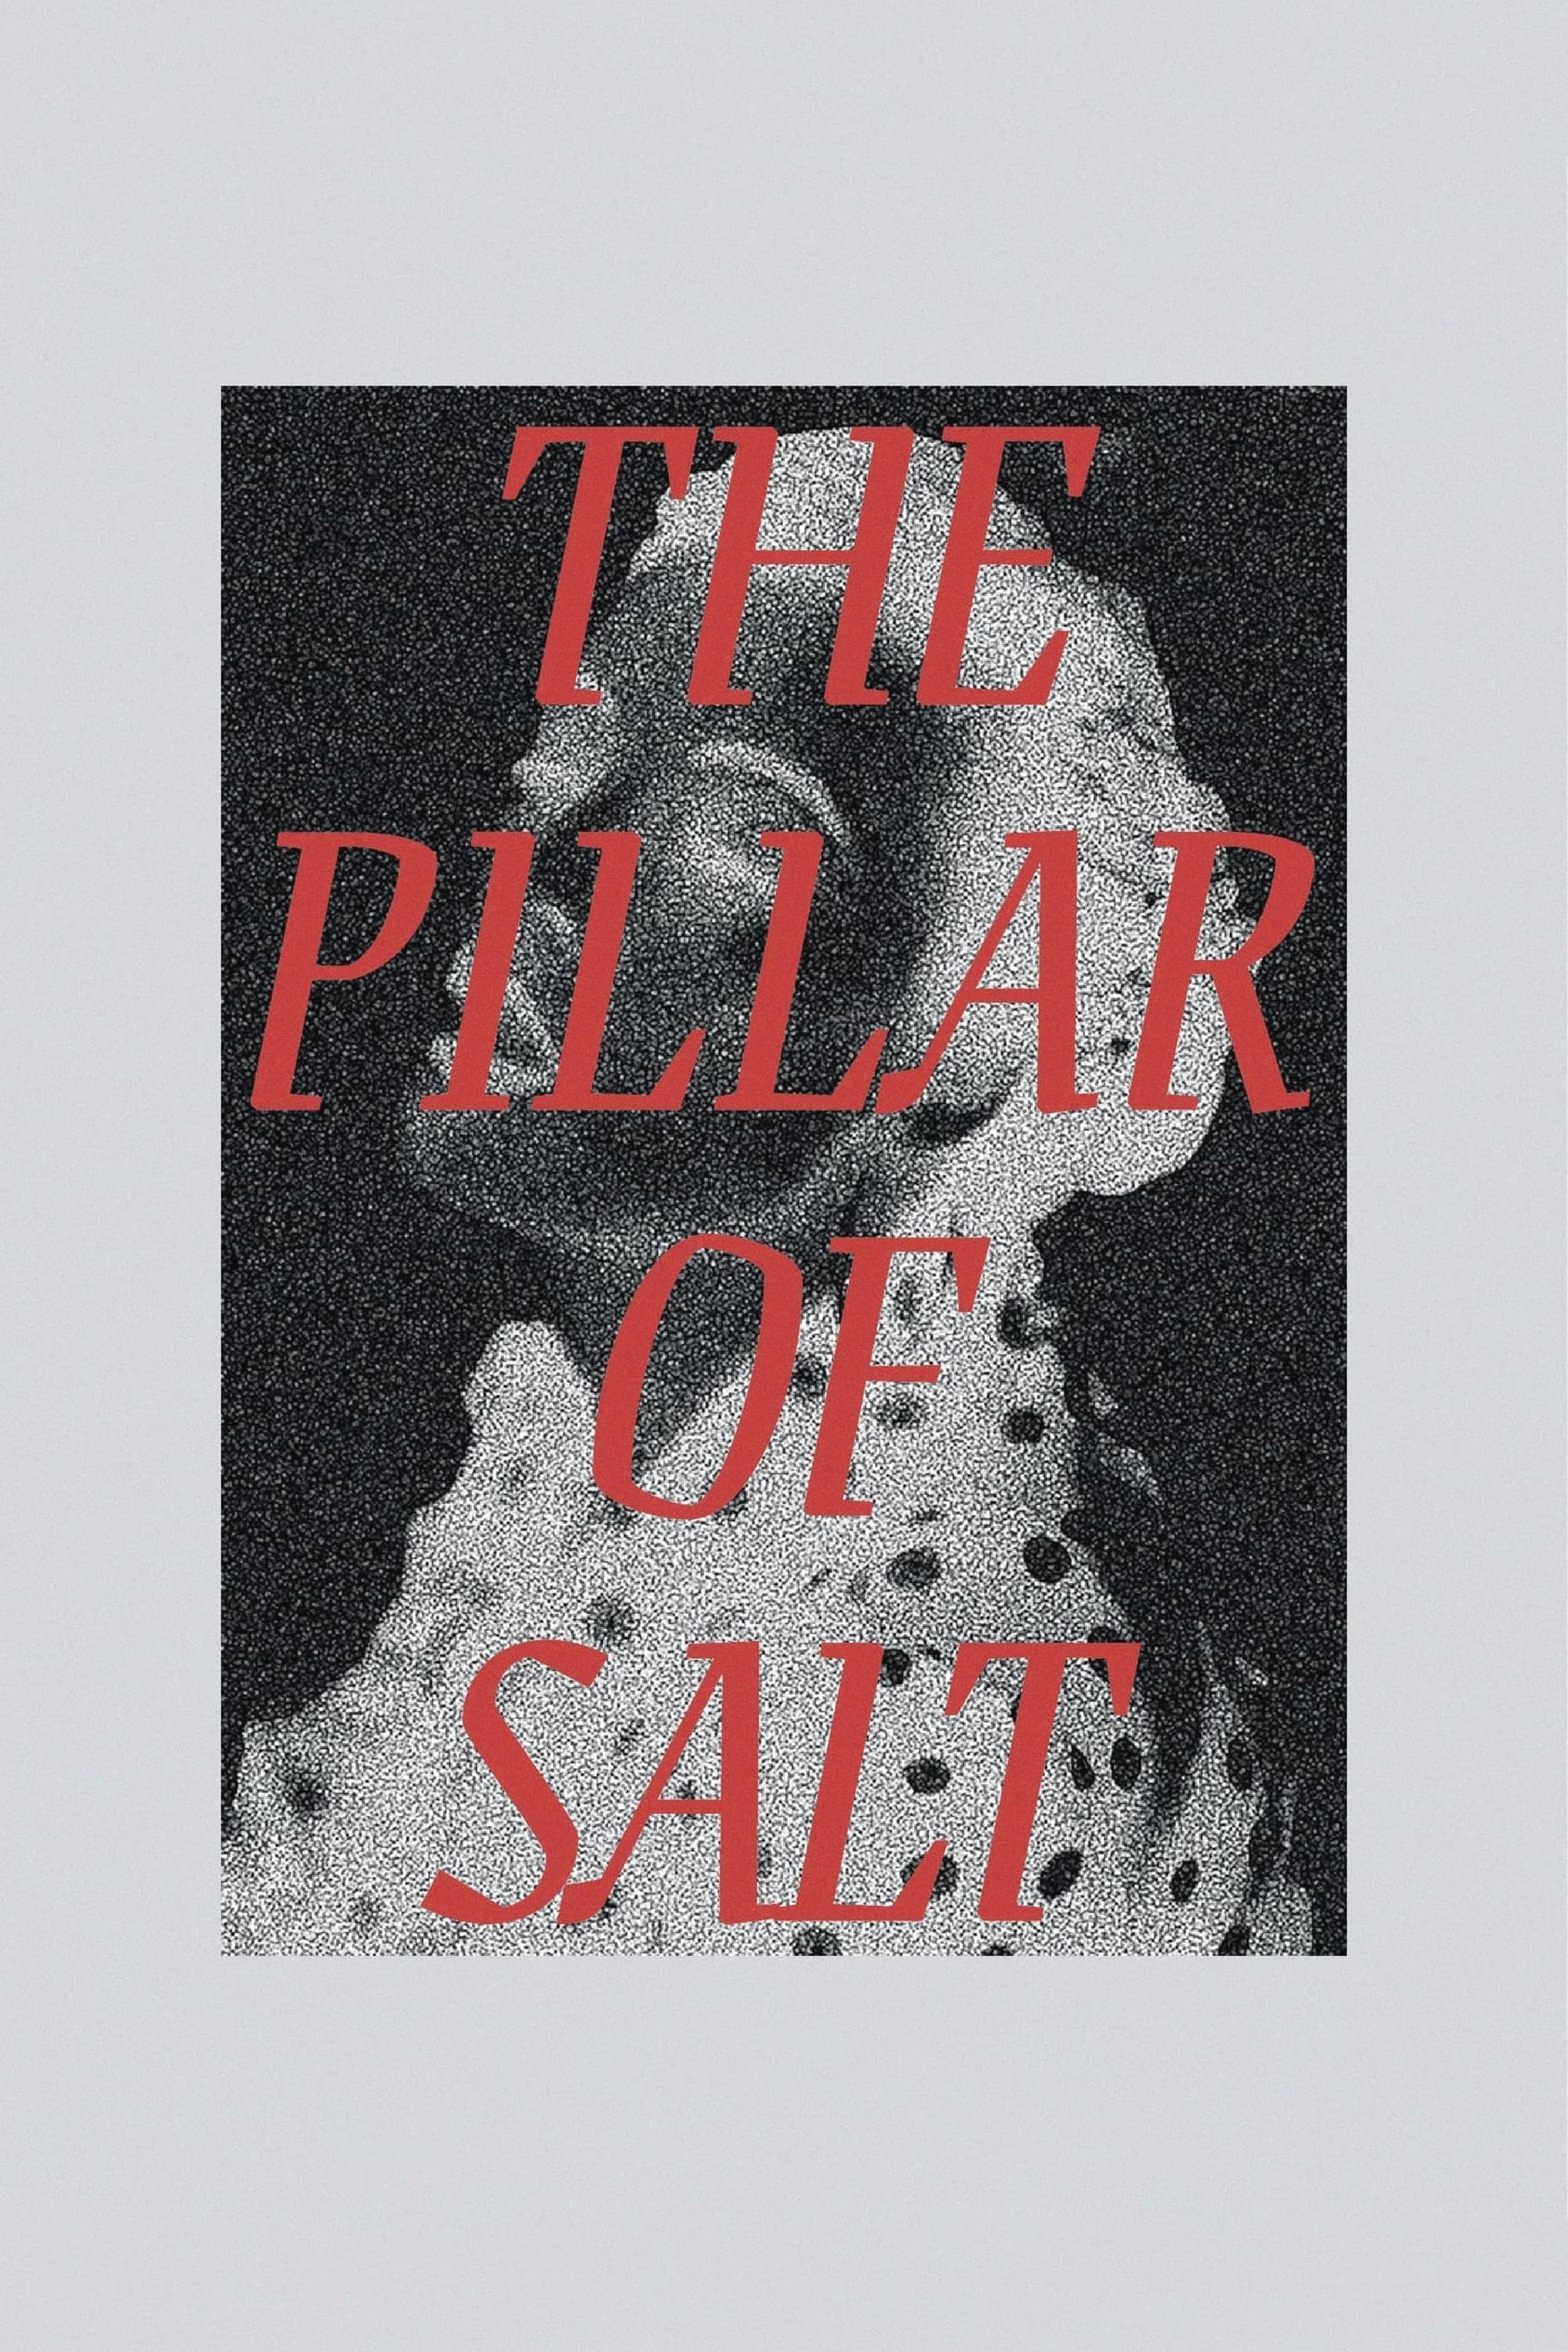 The Pillar of Salt